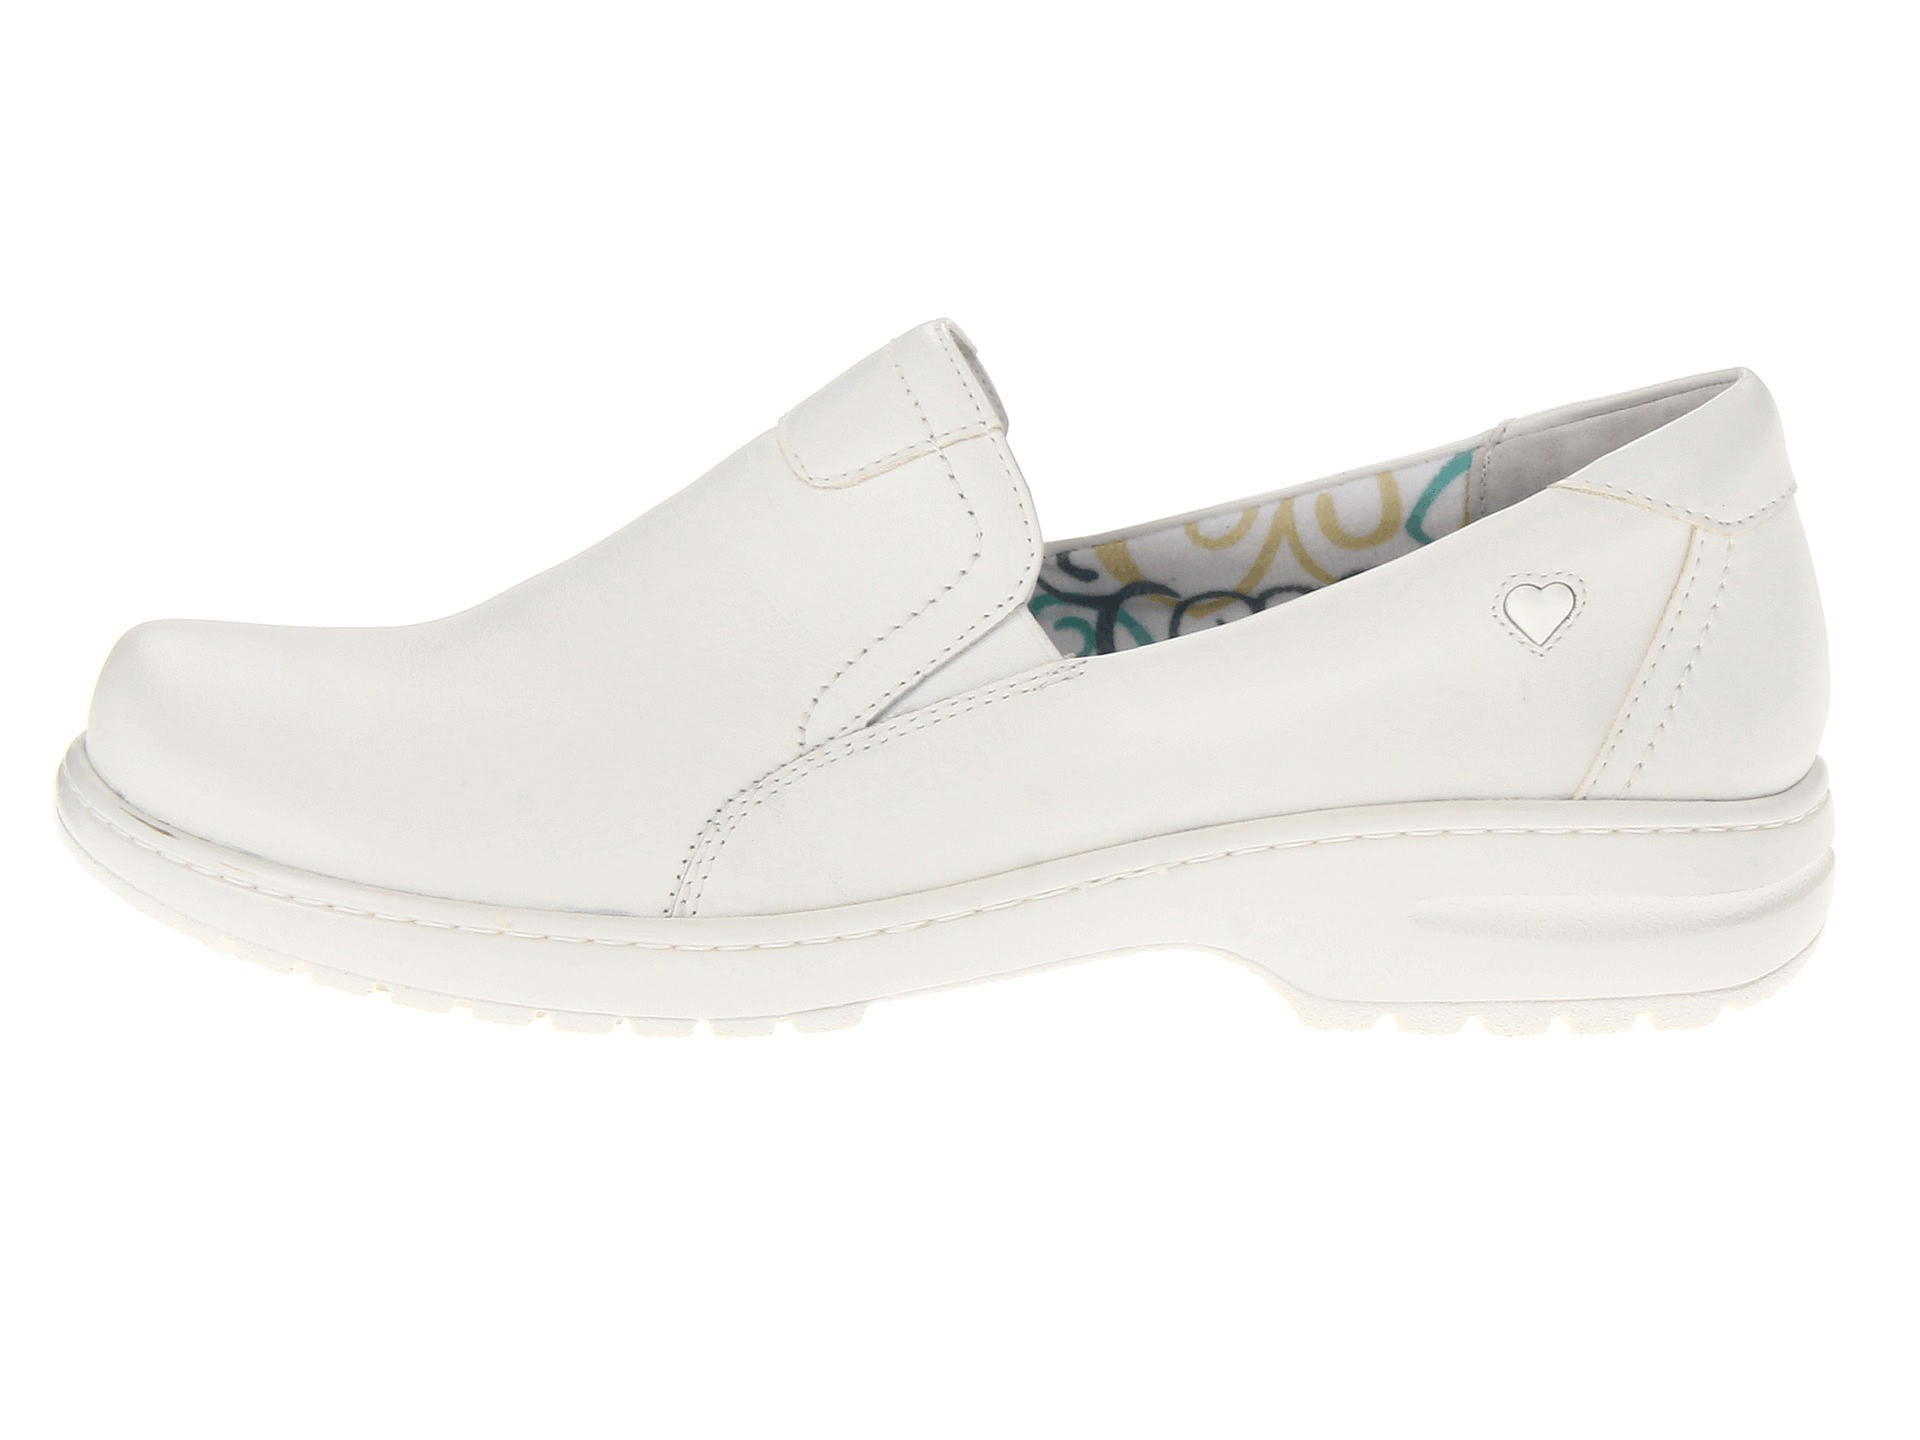 Best Sandals For Plantar Fasciitis: Zappos Nursing Shoes